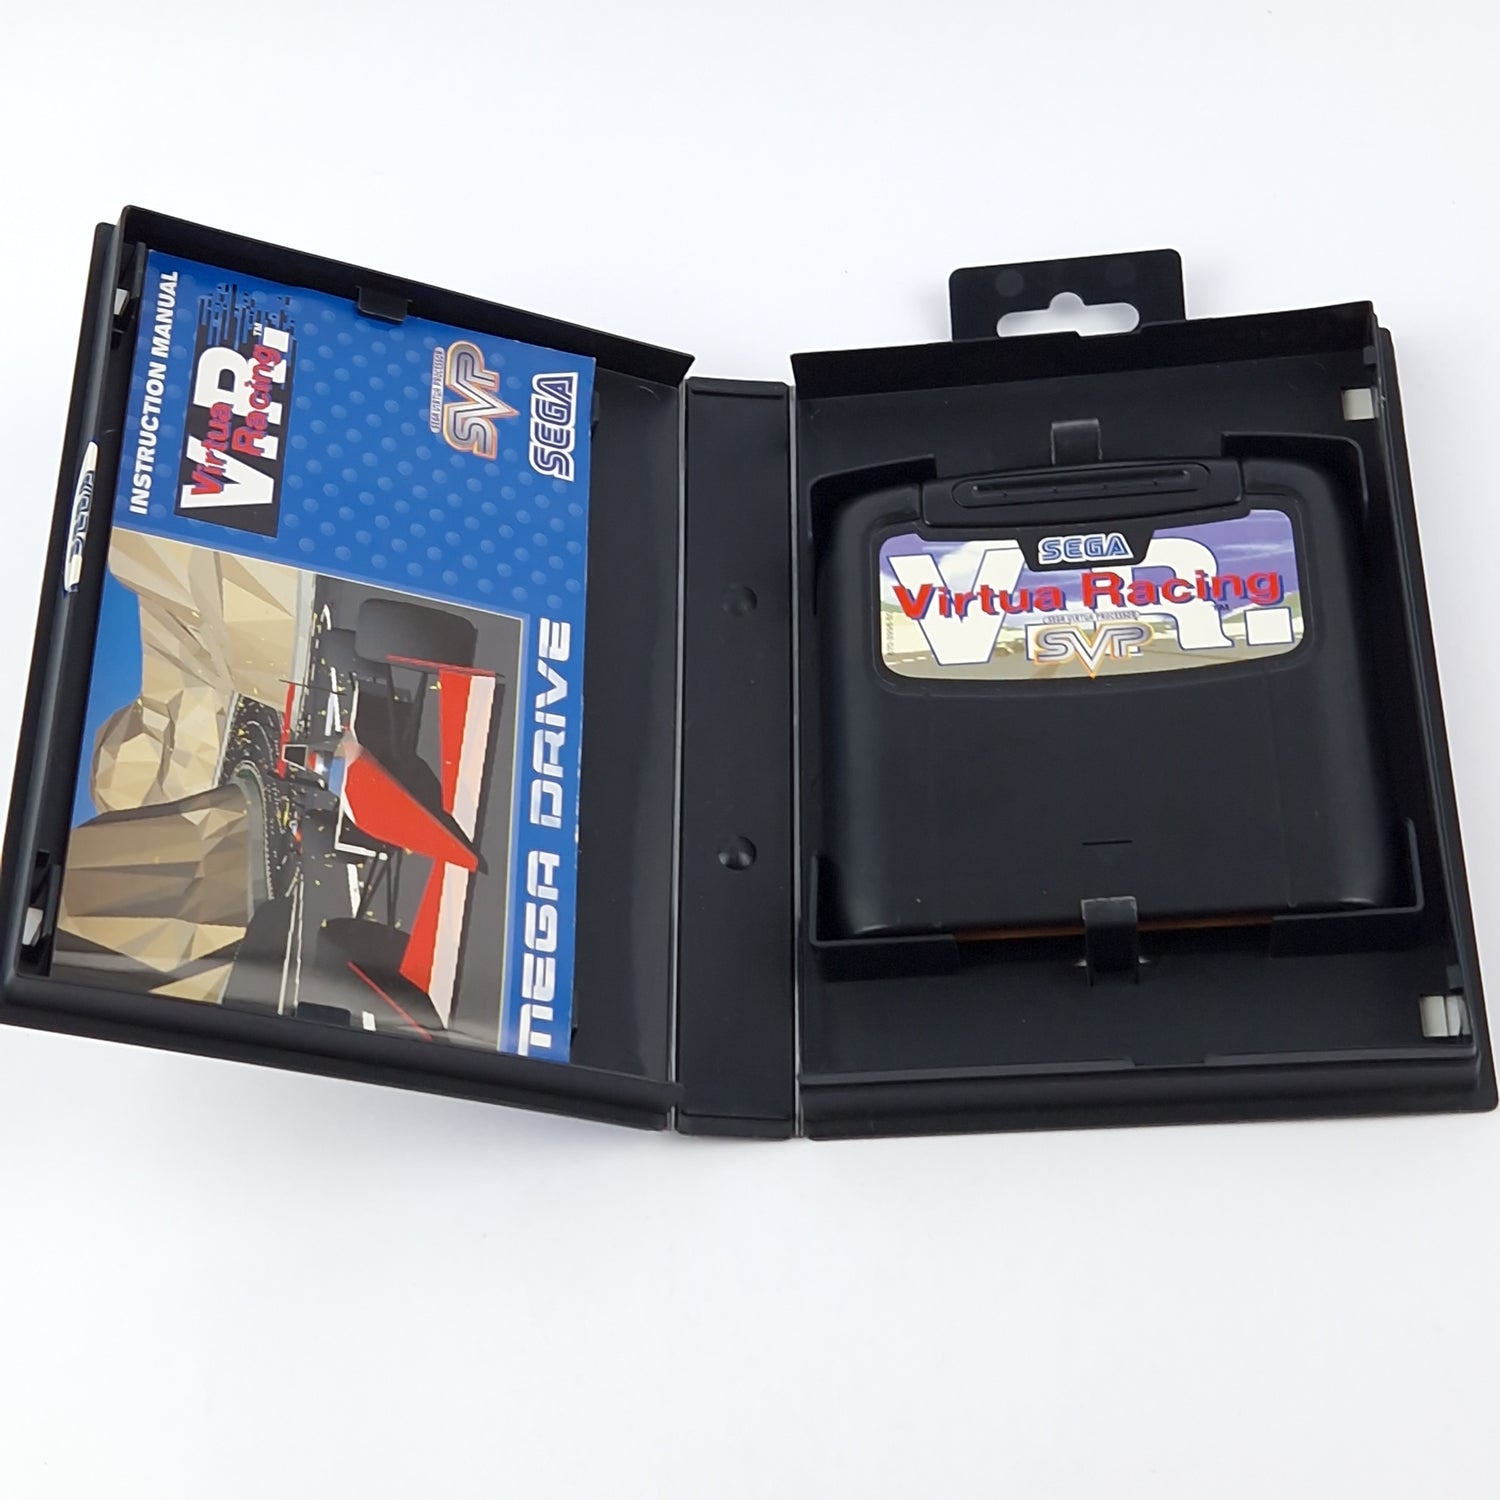 Sega Mega Drive Game: VR Virtua Racing - Module Instructions OVP cib / PAL MD